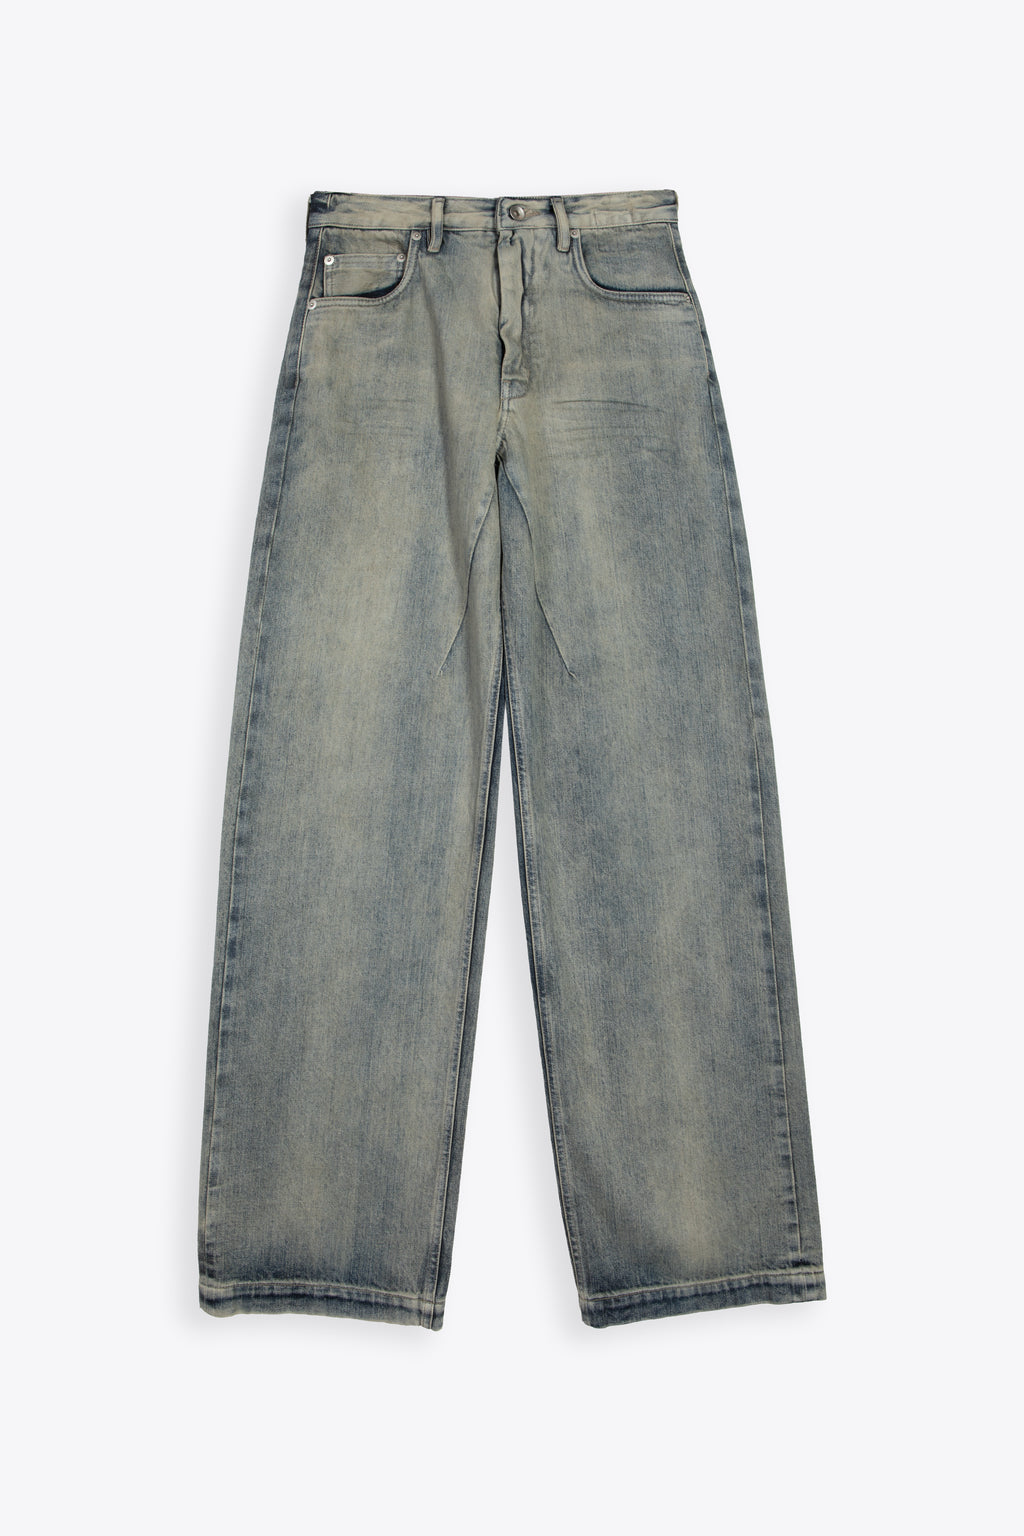 alt-image__Sandblasted-mid-blue-denim-baggy-pant---Geth-Jeans